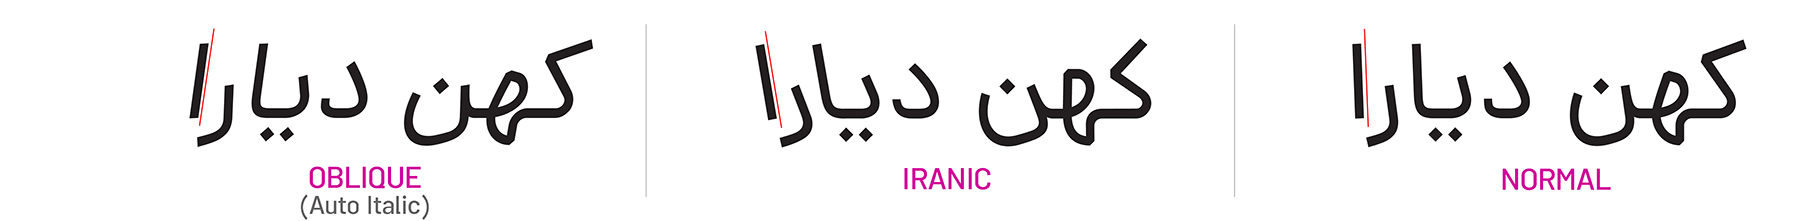 iranic2